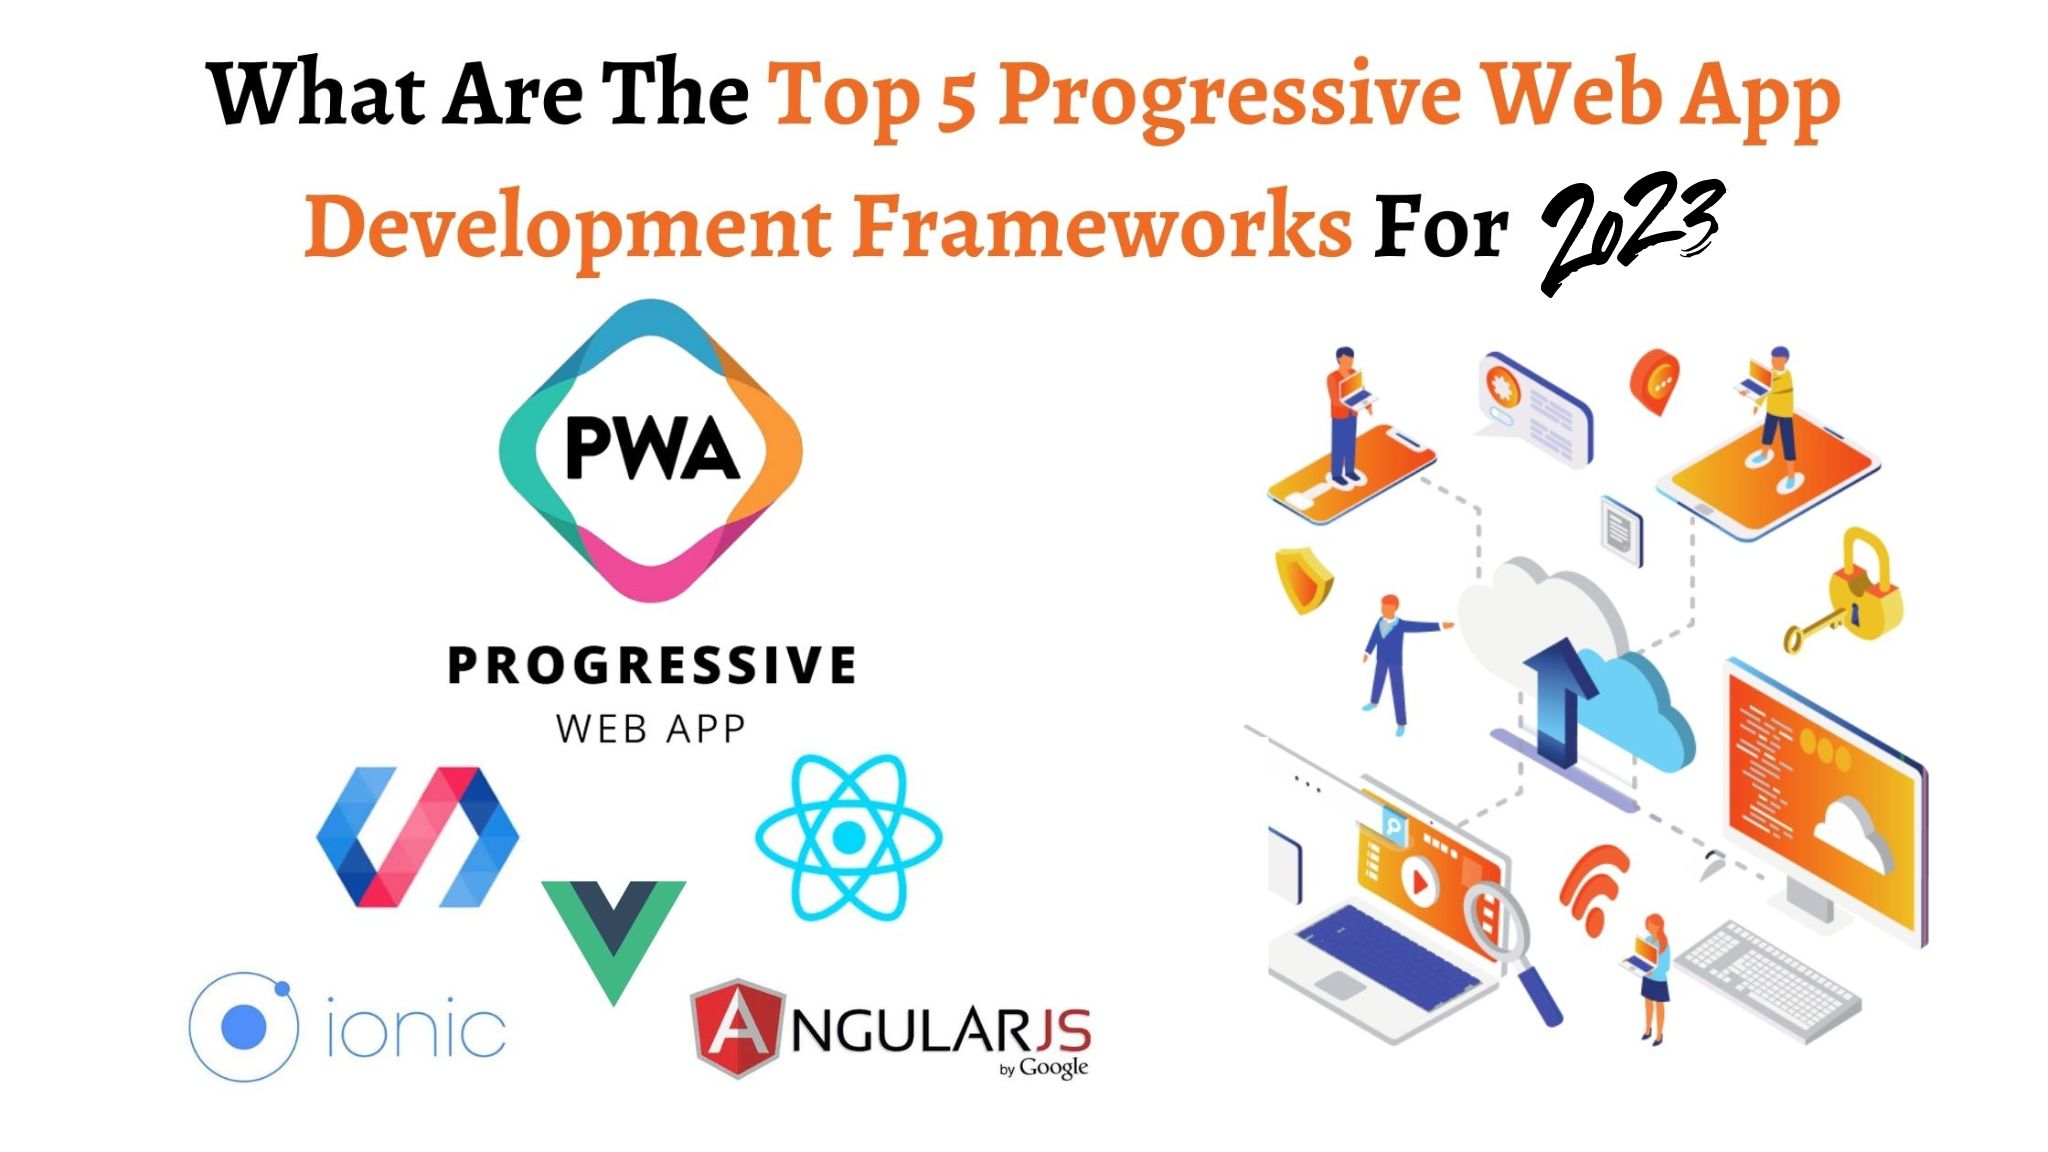 What Are The Top 5 Progressive Web App Development Frameworks For 2023?